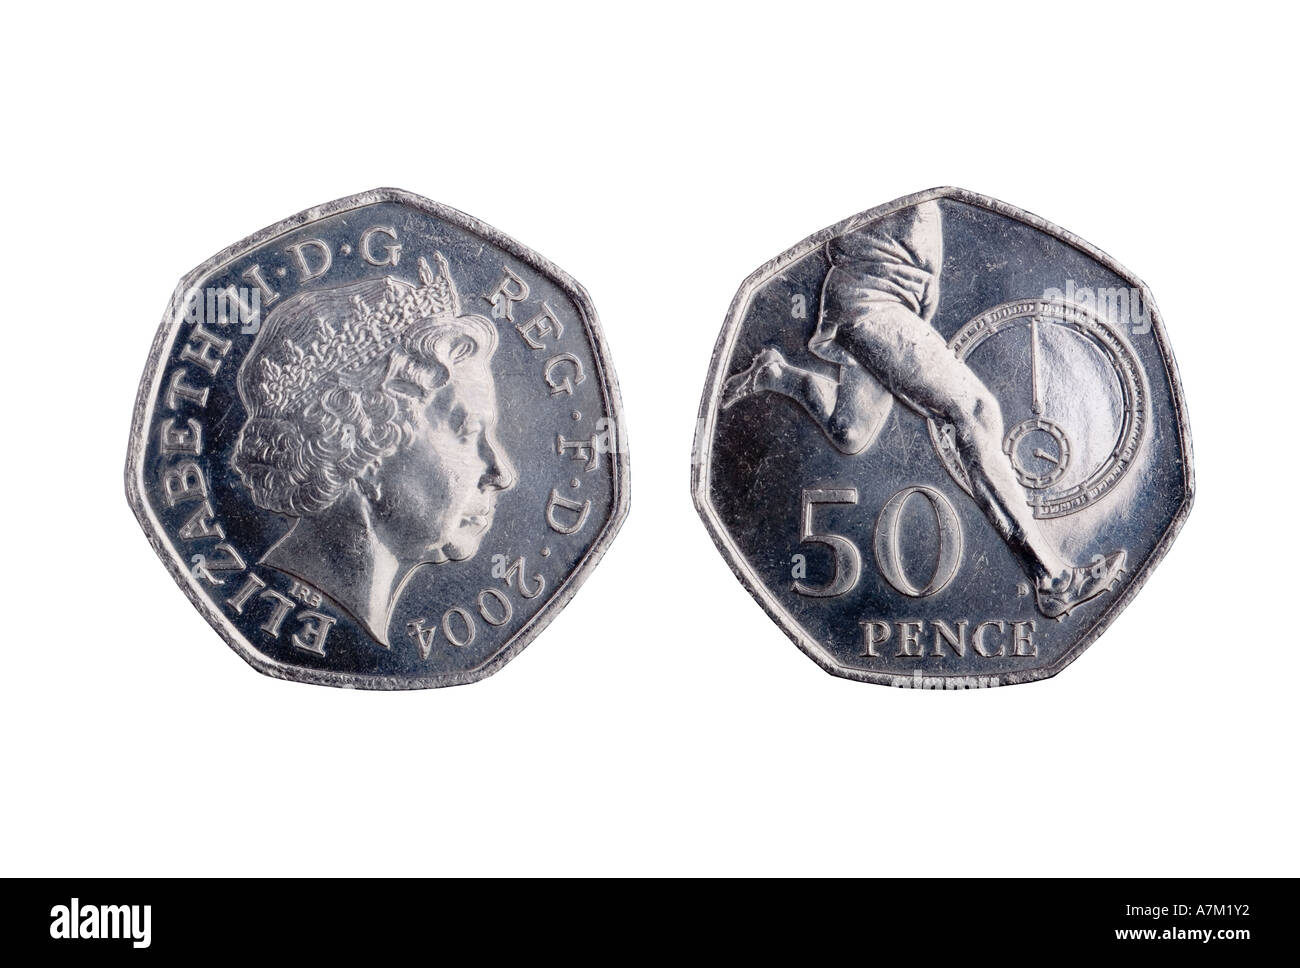 2004 59 50 peniques moneda para el 50º aniversario de la primera milla de cuatro minutos por Roger Bannister Foto de stock